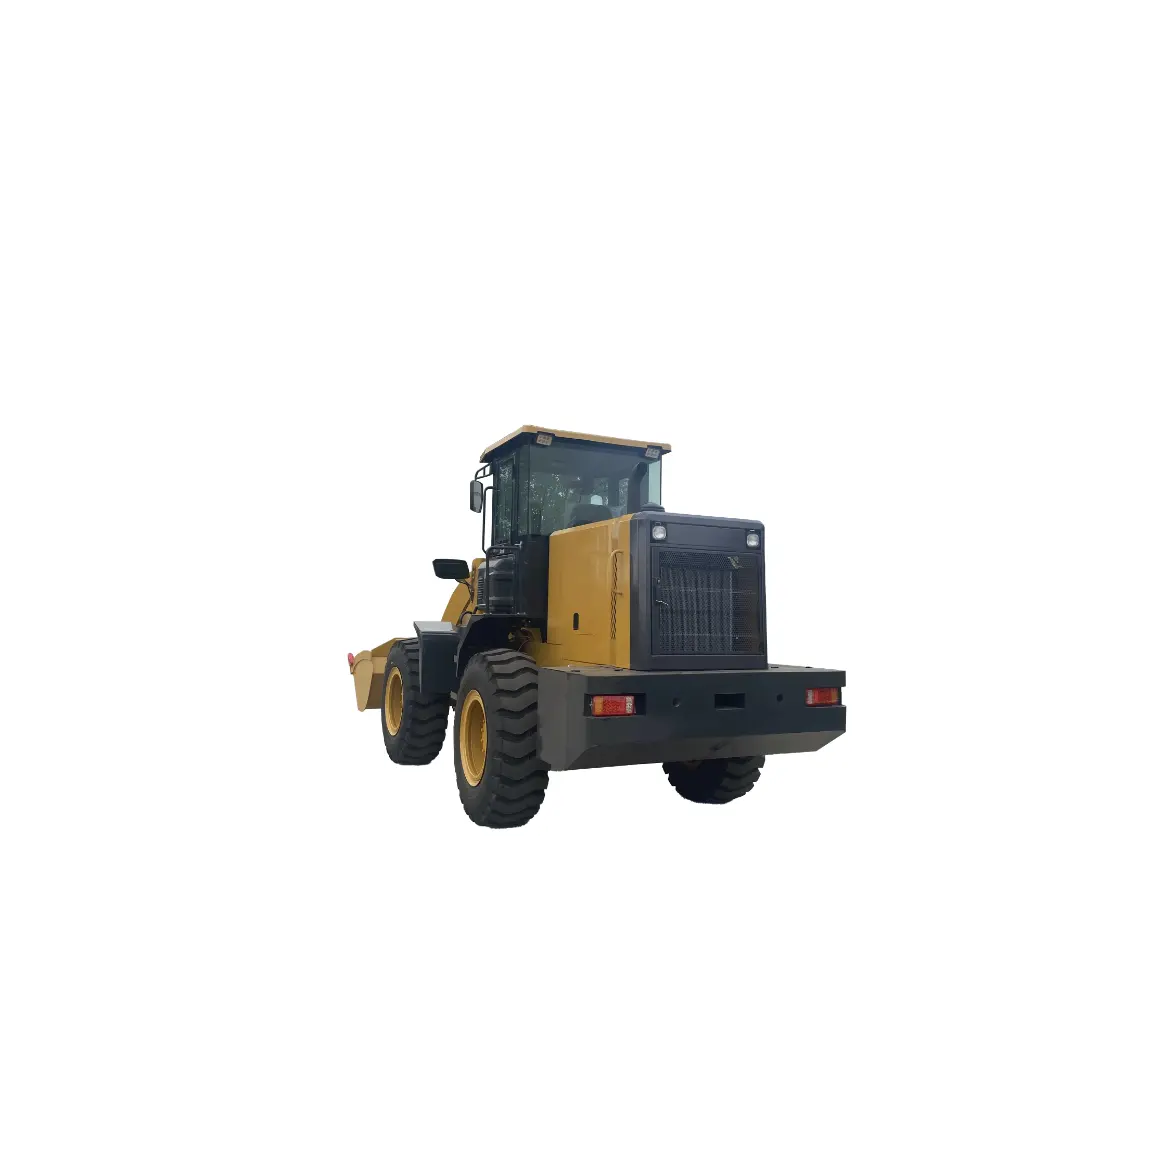 China Radlader Blazer Marke Traktor mit Lader